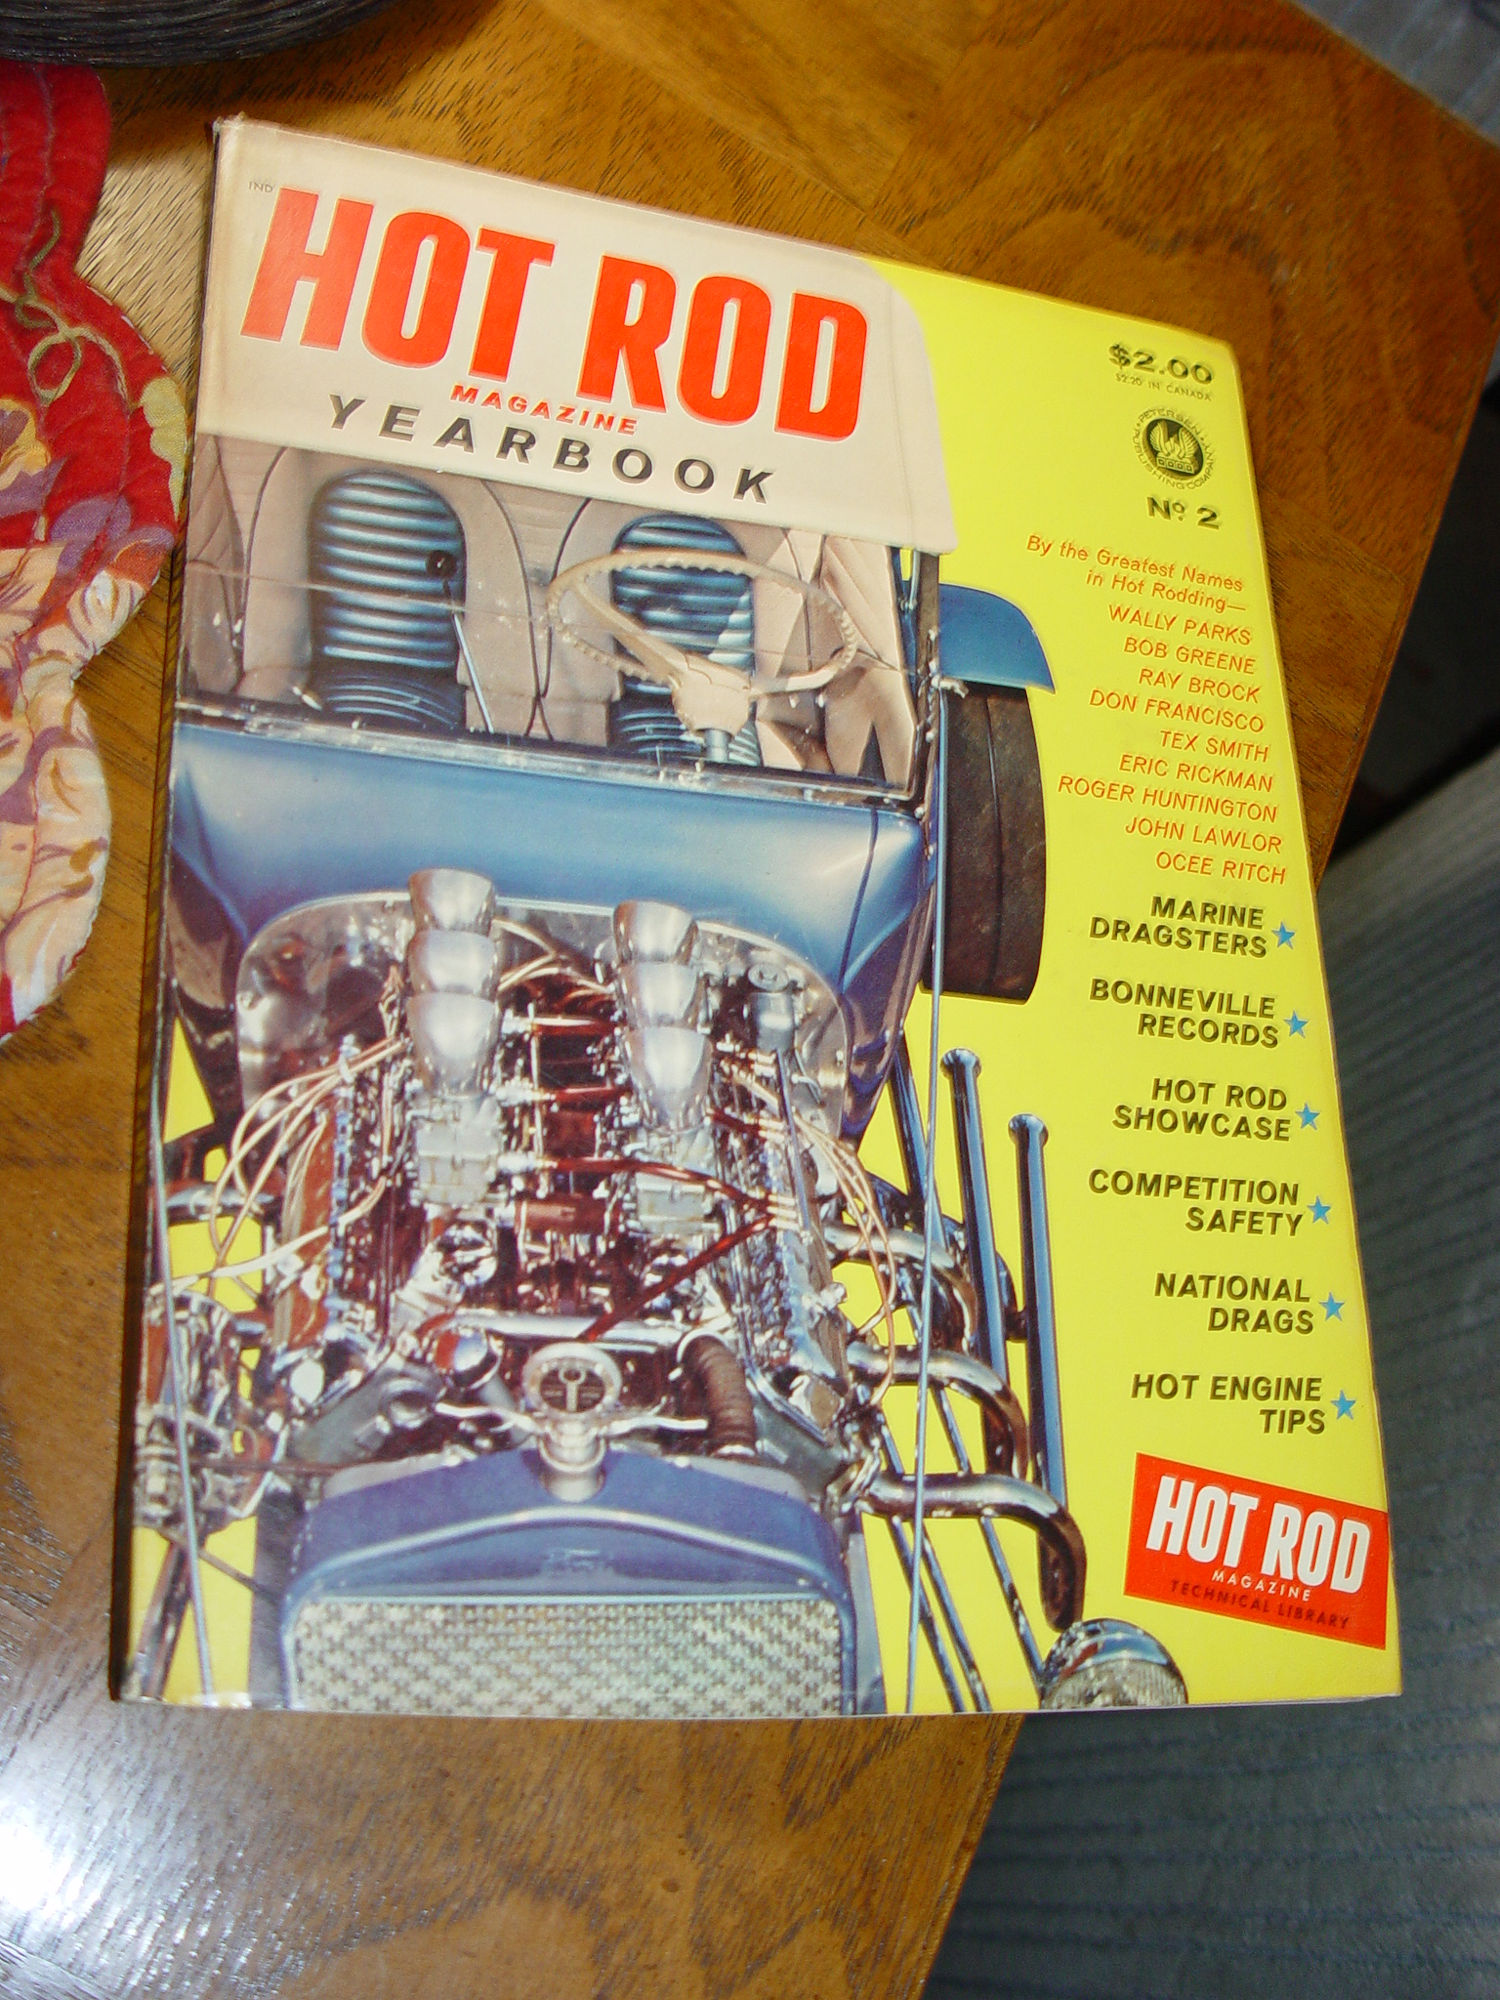 The Hot Rod
                        Magazine 1962 Yearbook, No. 2